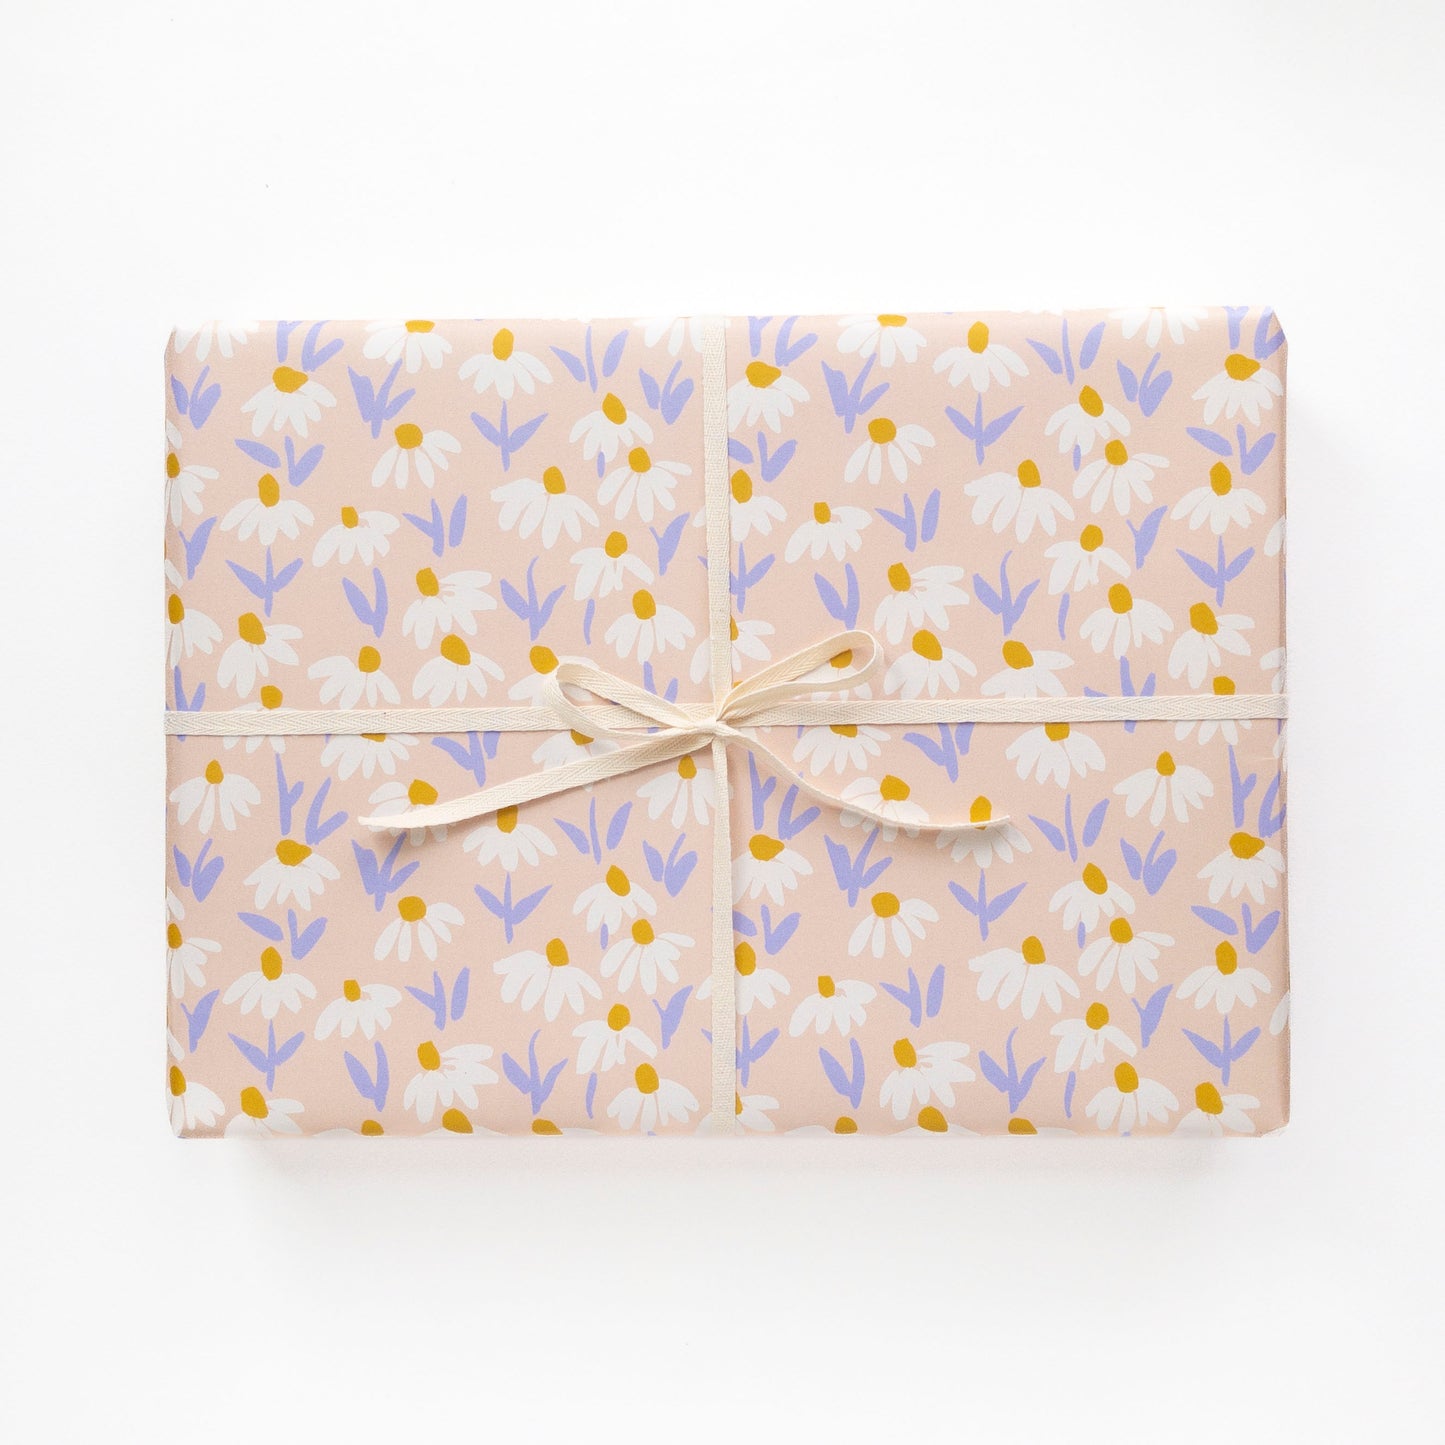 Floral gift wrap set